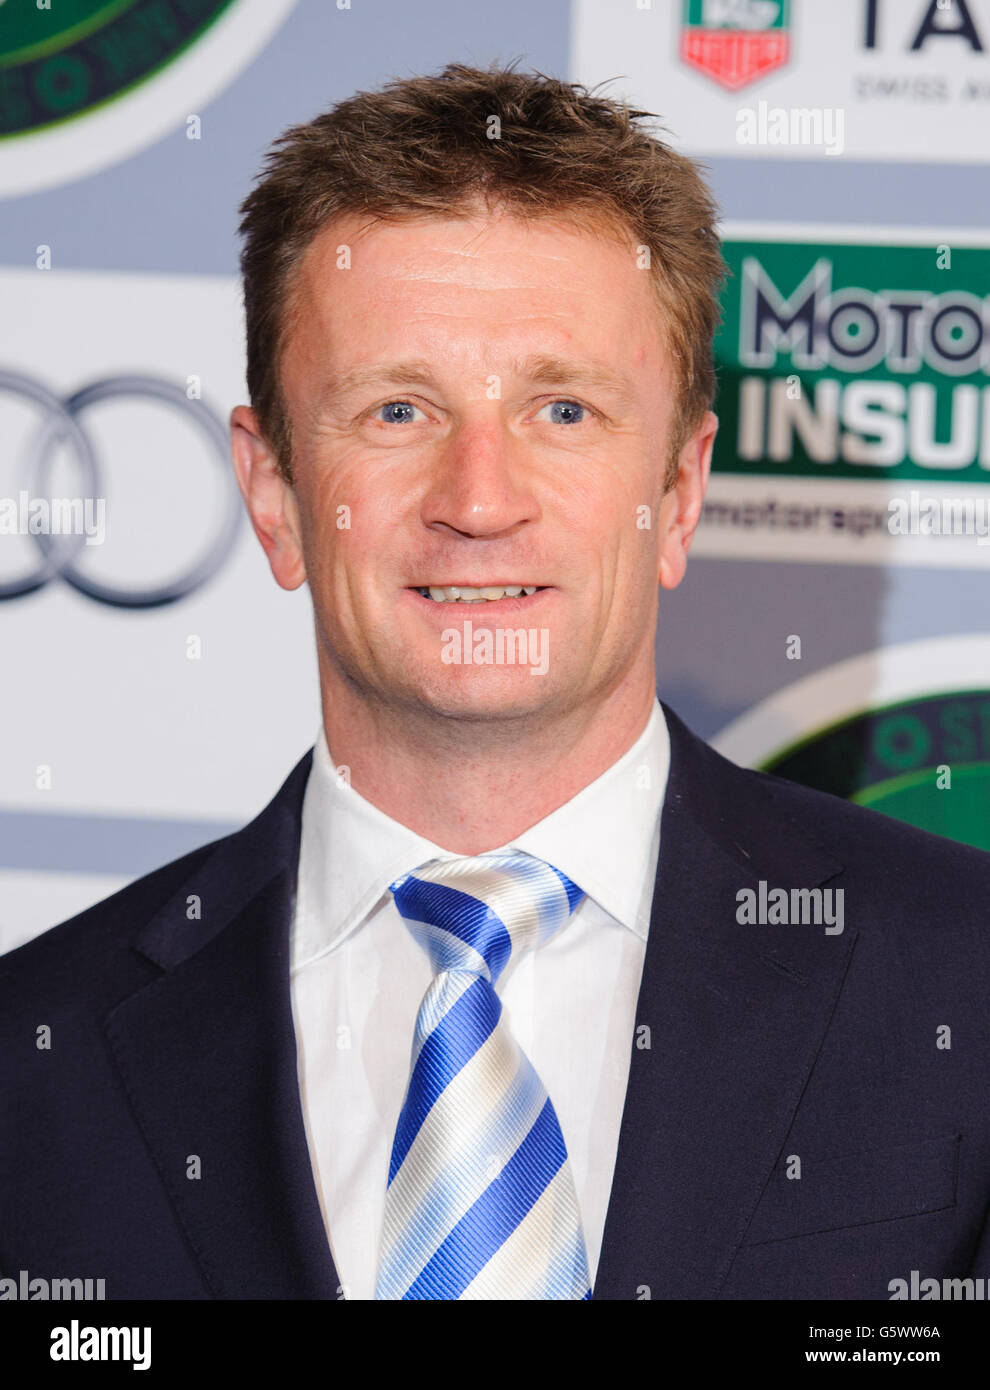 Allan McNish kommt vor den Moto Sport Magazine Hall of Fame Awards im Royal Opera House in London an. Stockfoto